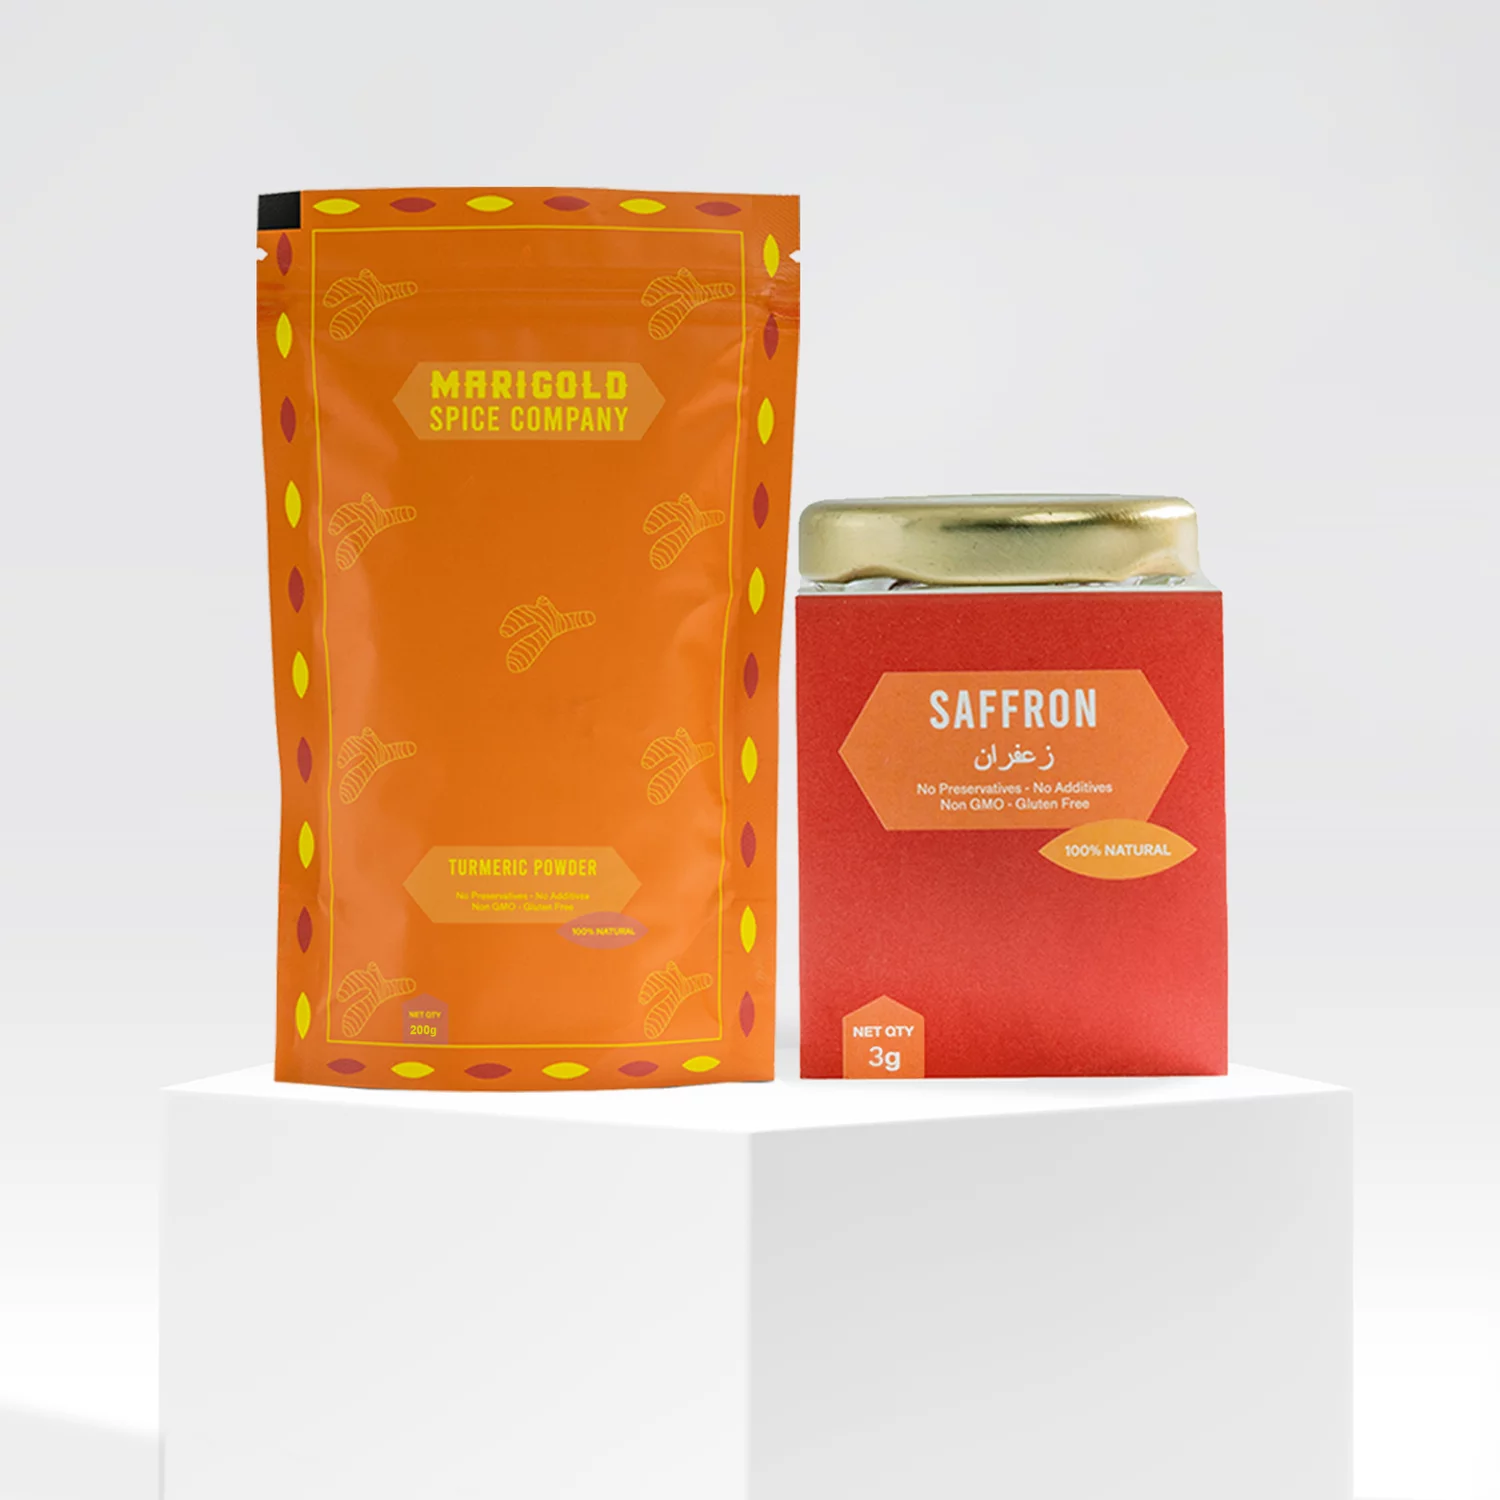 Marigold Spice Company's 200 Grams Pack of Turmeric Powder and Saffron 3 Gram